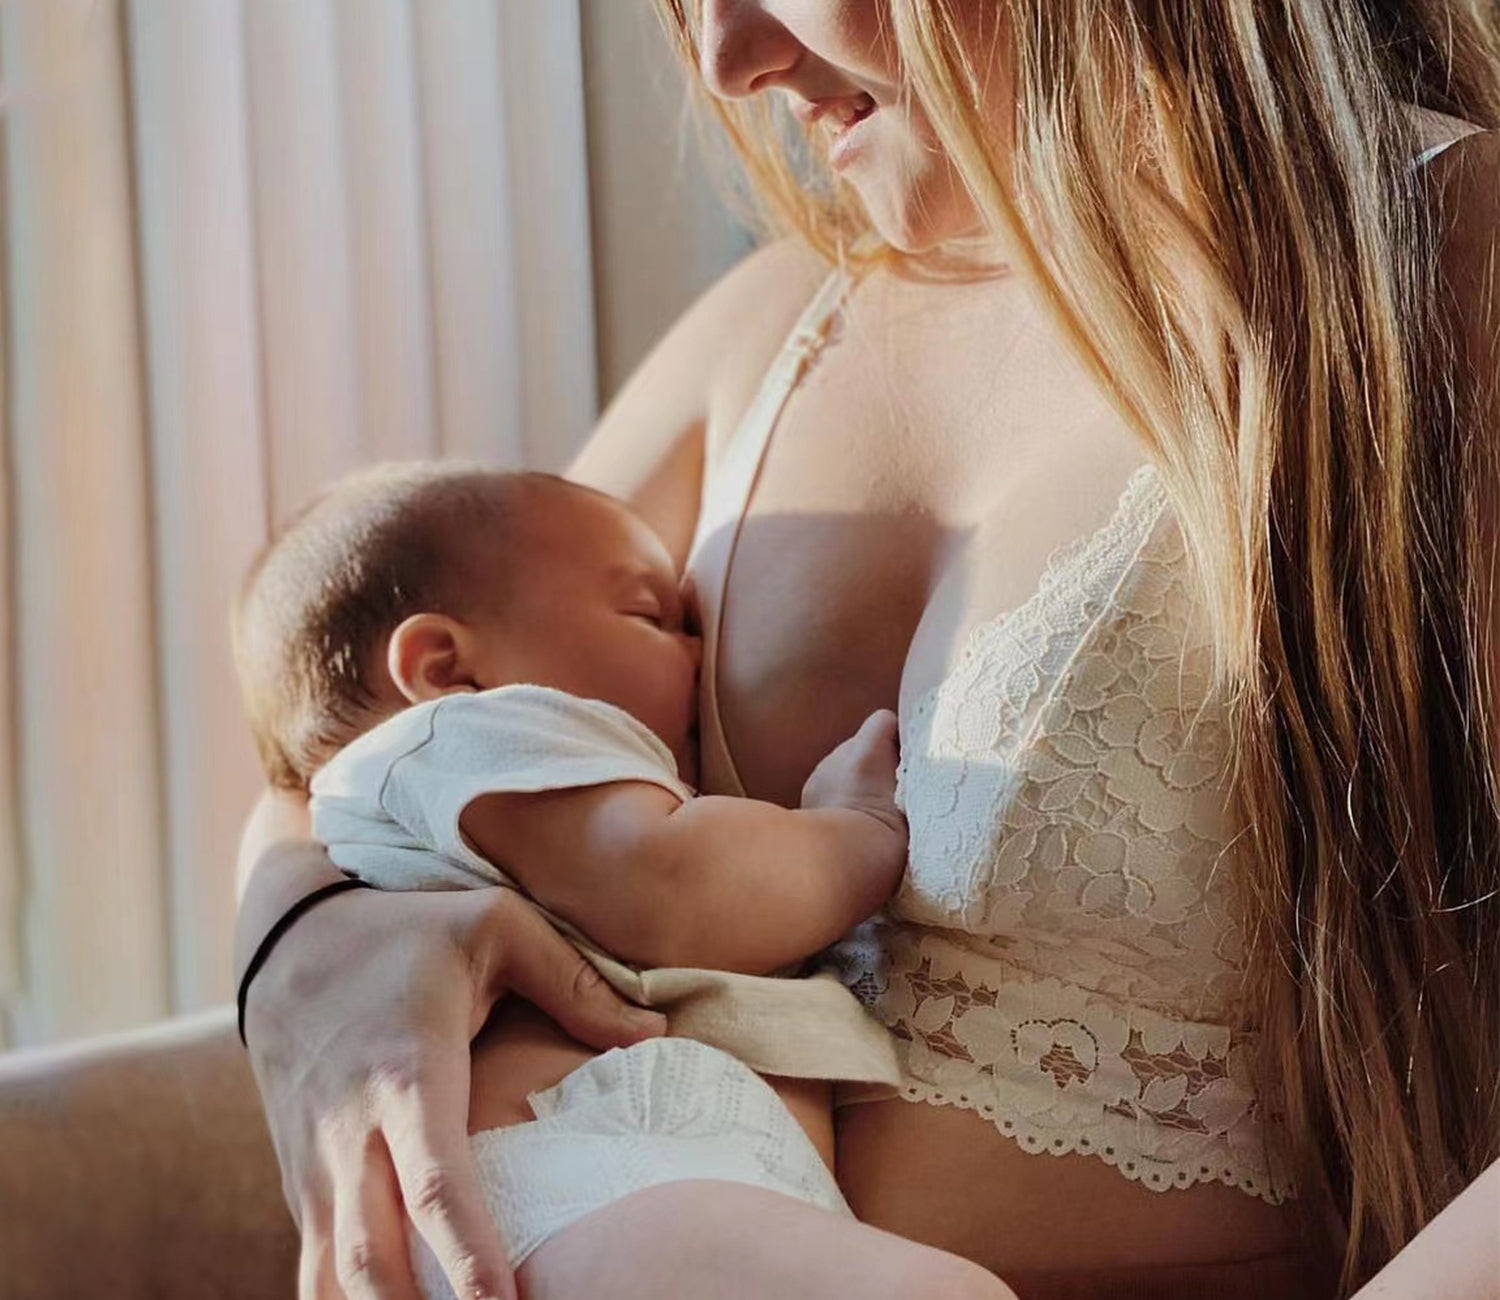 Bulk-buy Hot Sale Plus Size Nursing Bra for Breastfeeding